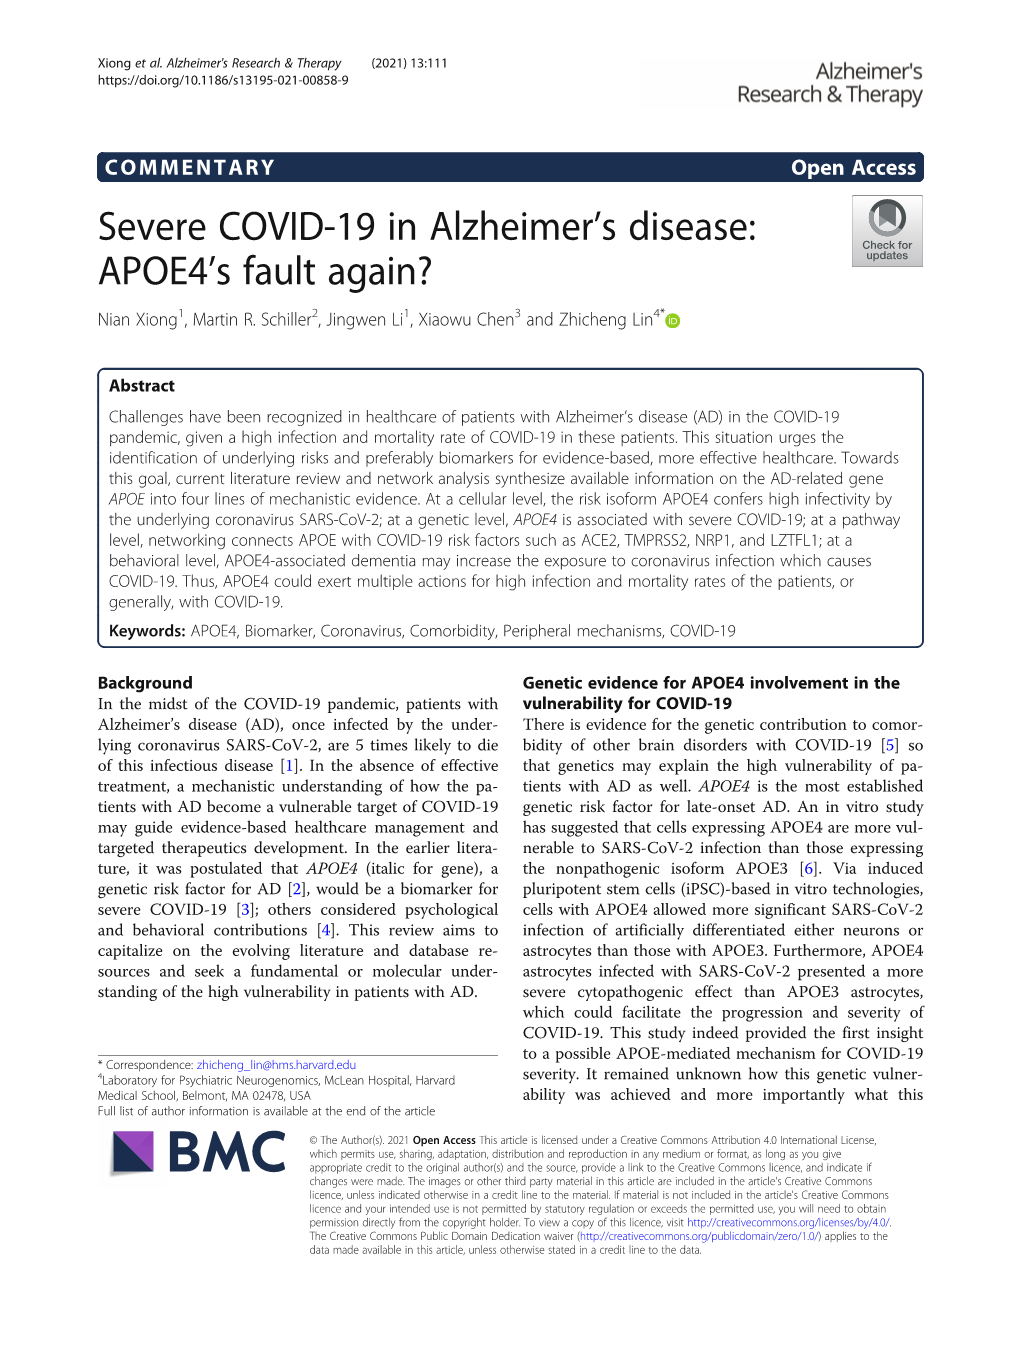 Severe COVID-19 in Alzheimer's Disease